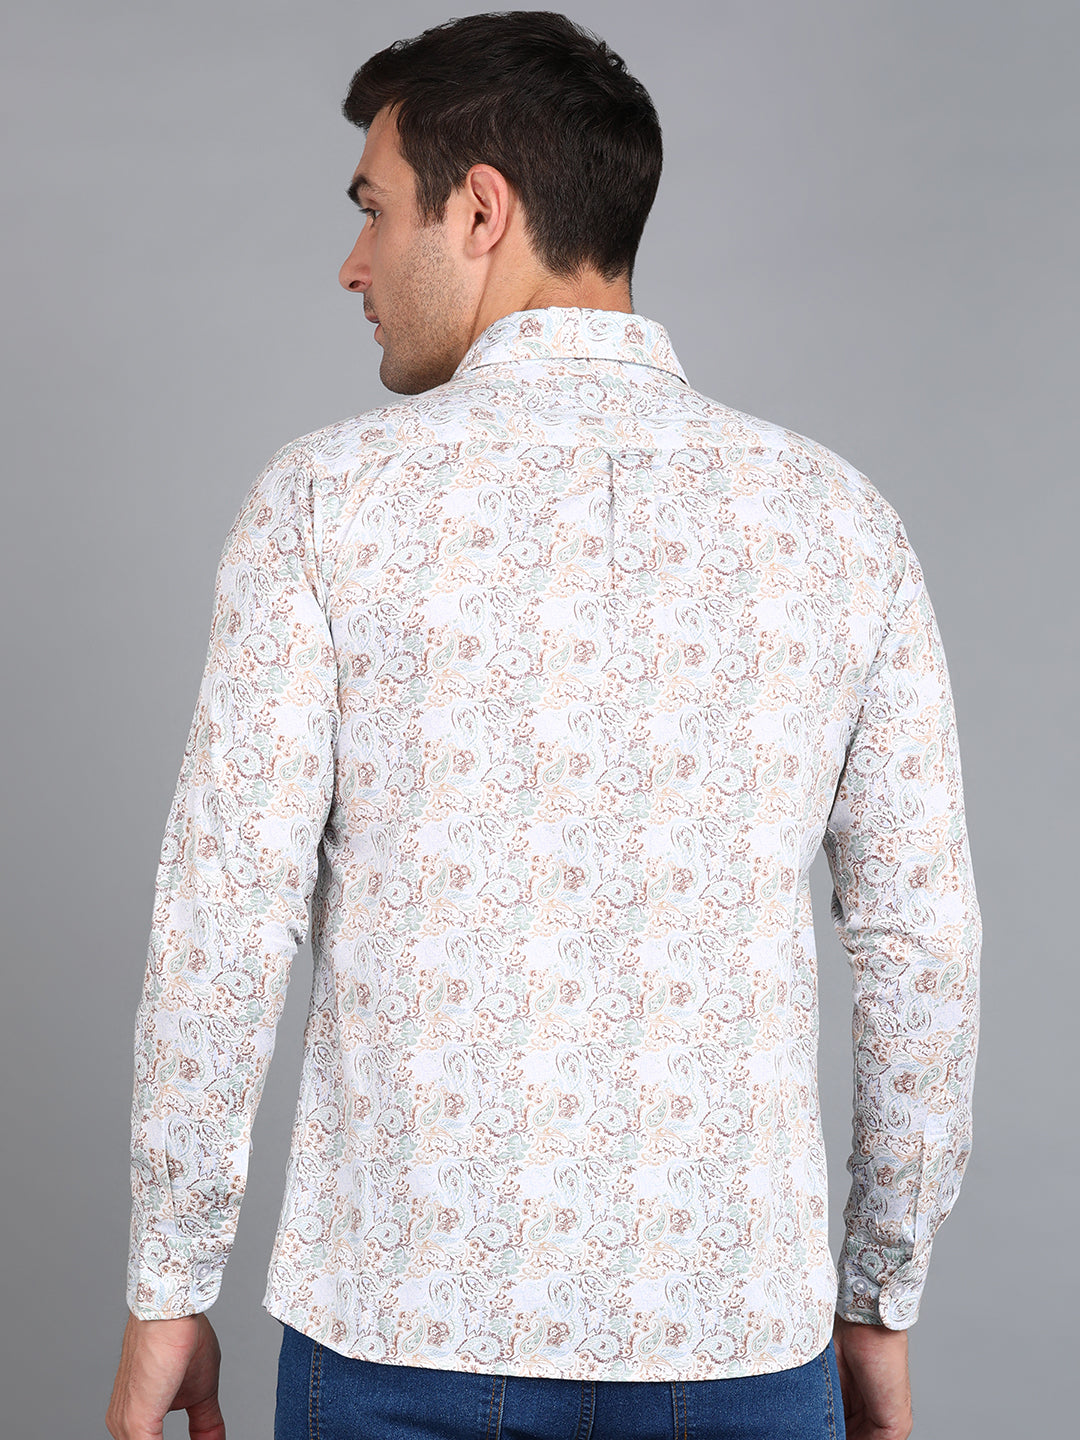 Beige Floral Printed Off White Slim Fit Shirt